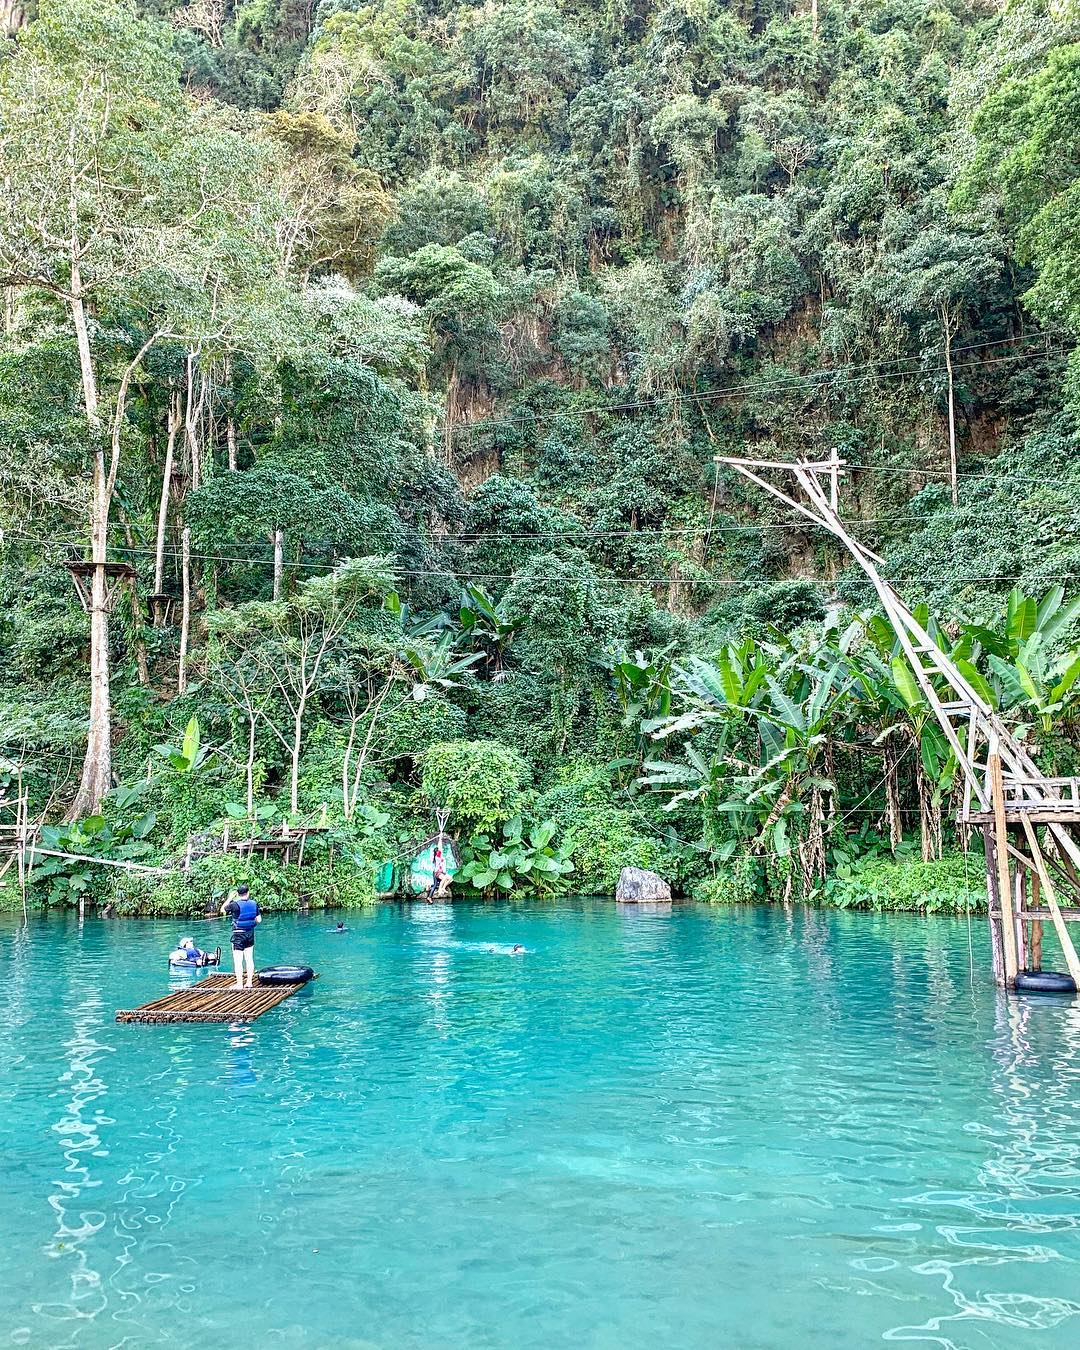 Blue Lagoon 3 in Vang Vieng #vangvieng #laos #bluelagoon #bluelagoon3 #swim #clear #water #blue #travel #travelblog